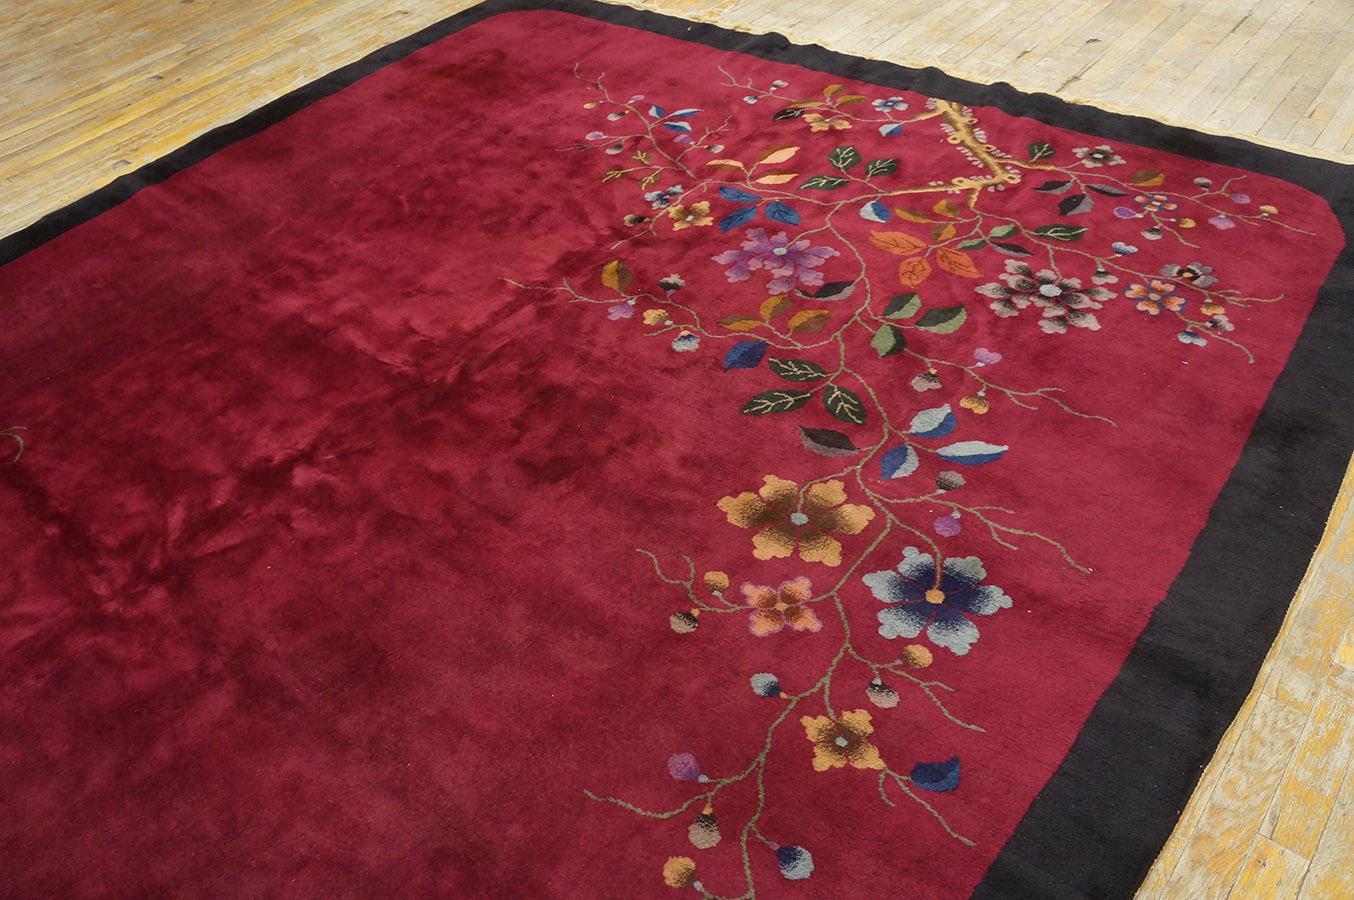 1920s Chinese Art Deco Carpet ( 8' 10'' x 11' 6'' - 270 x 350 cm ) For Sale 3